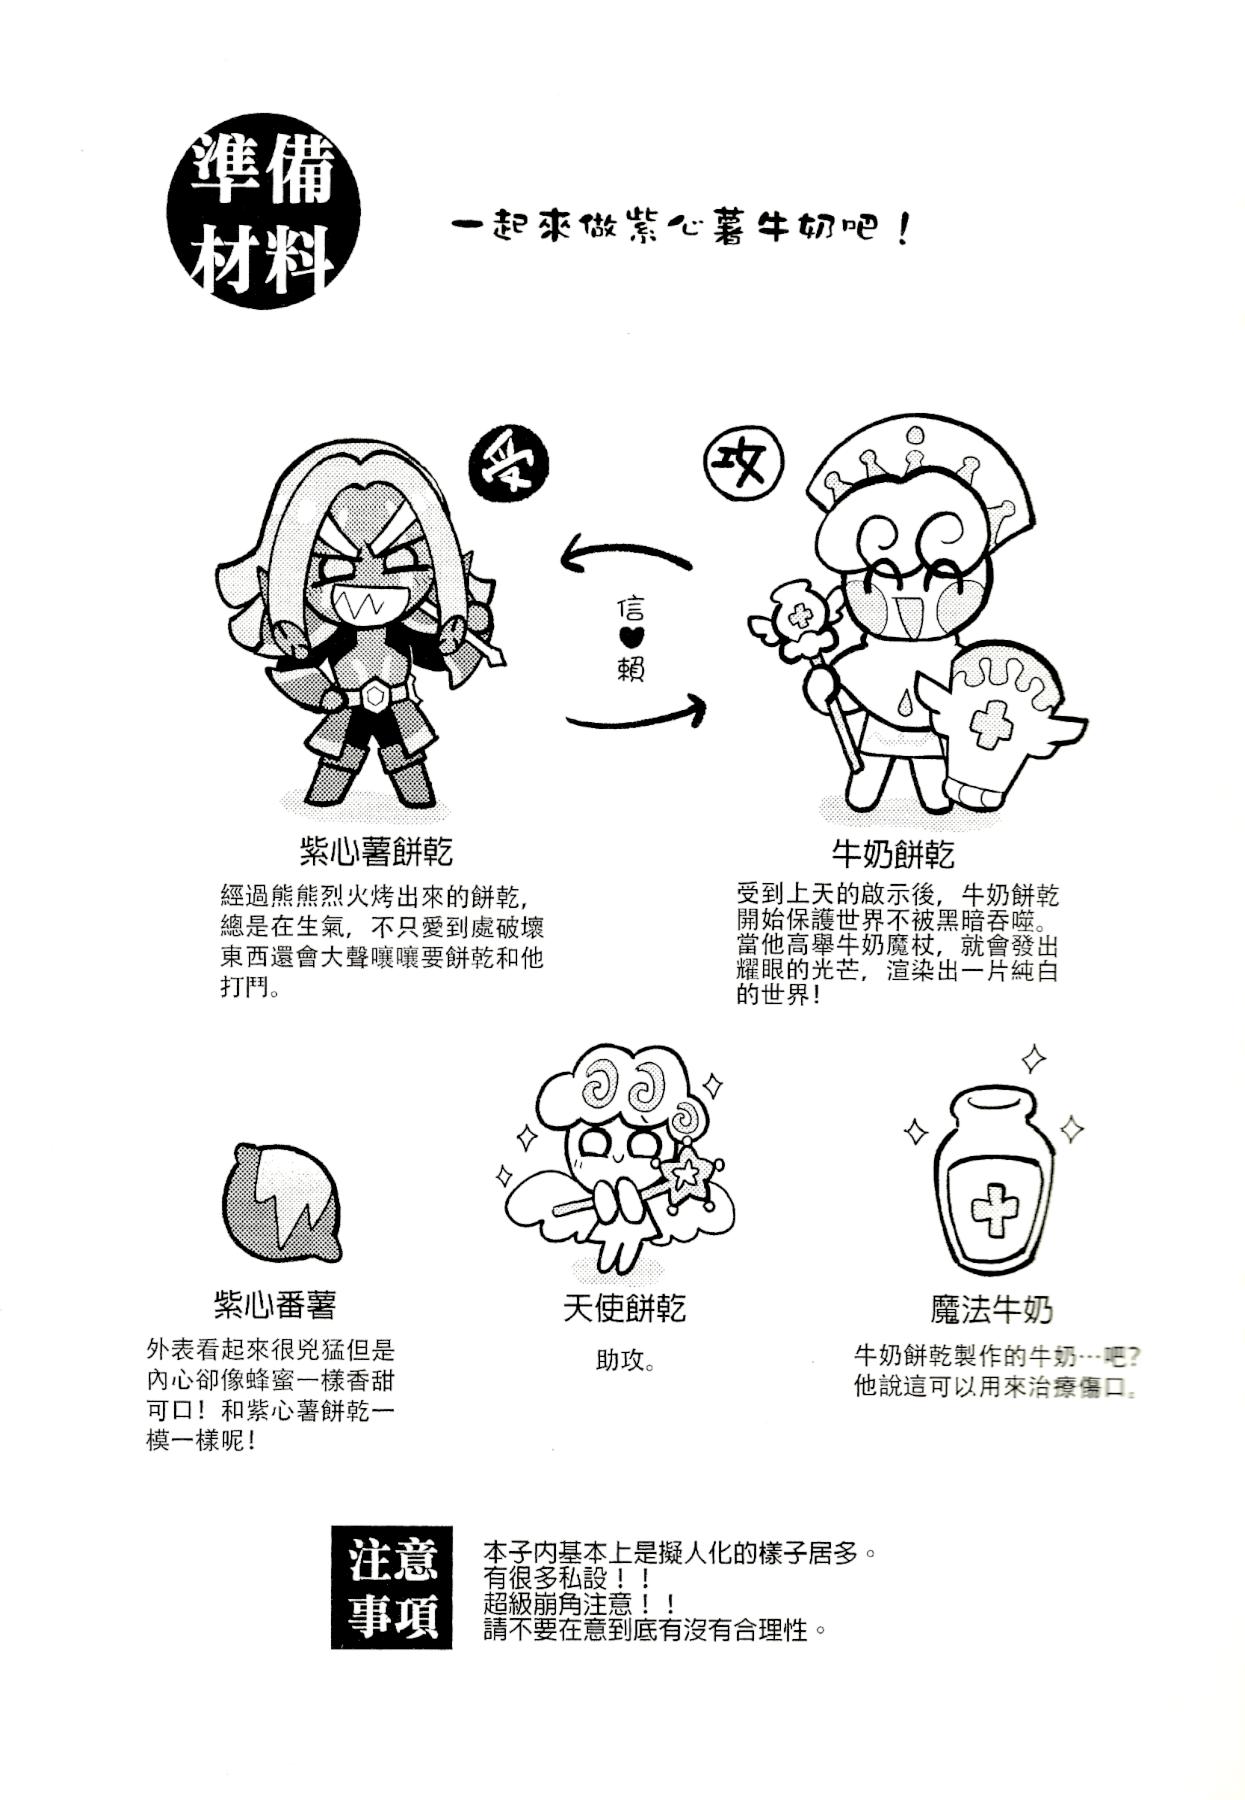 Yī qǐlái zuò zǐ xīn shǔ niúnǎi ba | "Let's make purple sweet potato milk together" 1